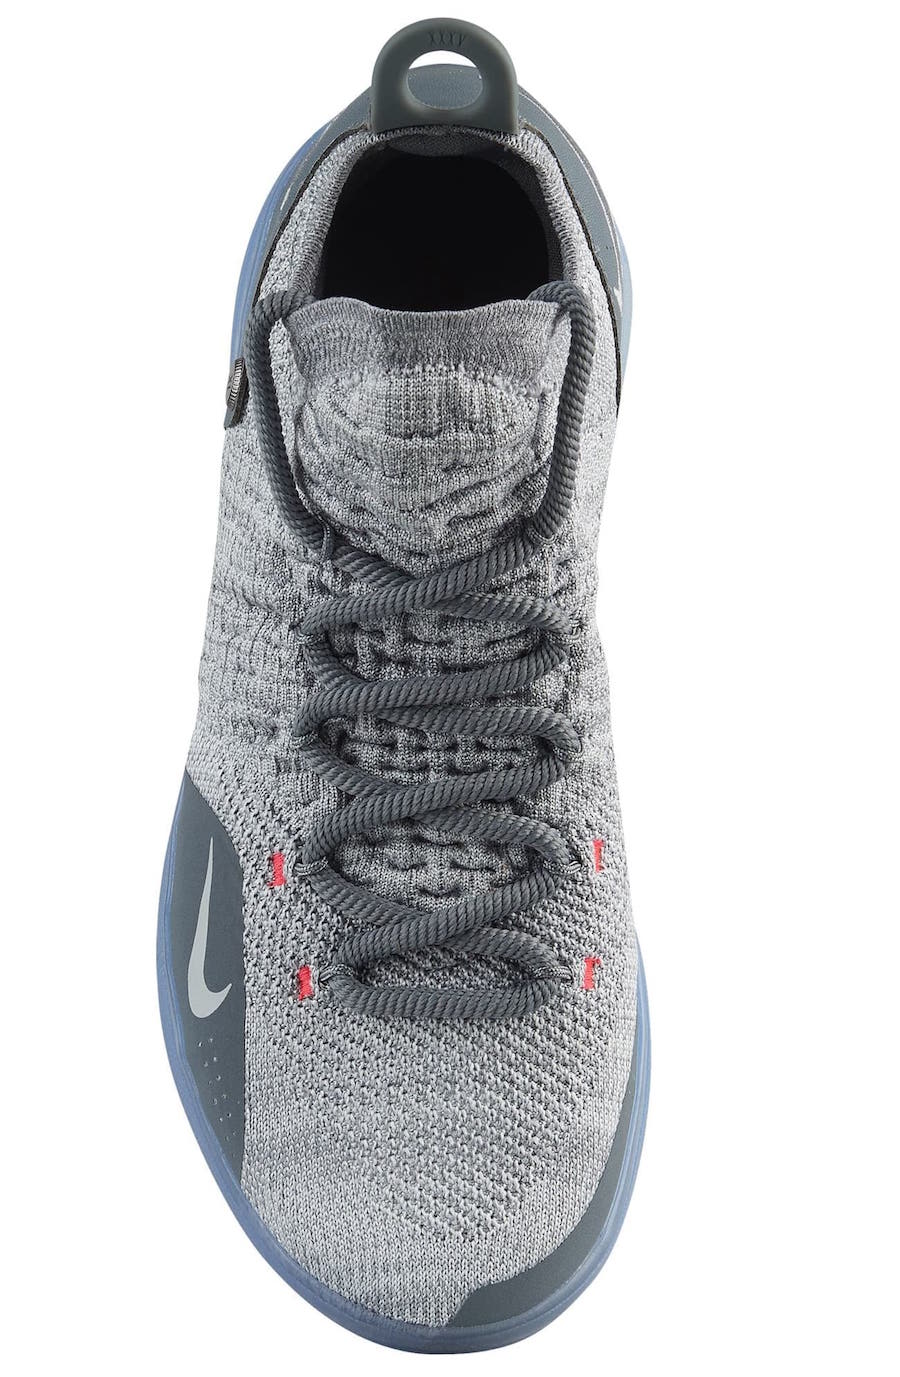 Nike KD 11 Cool Grey AO2604-002 Release Date